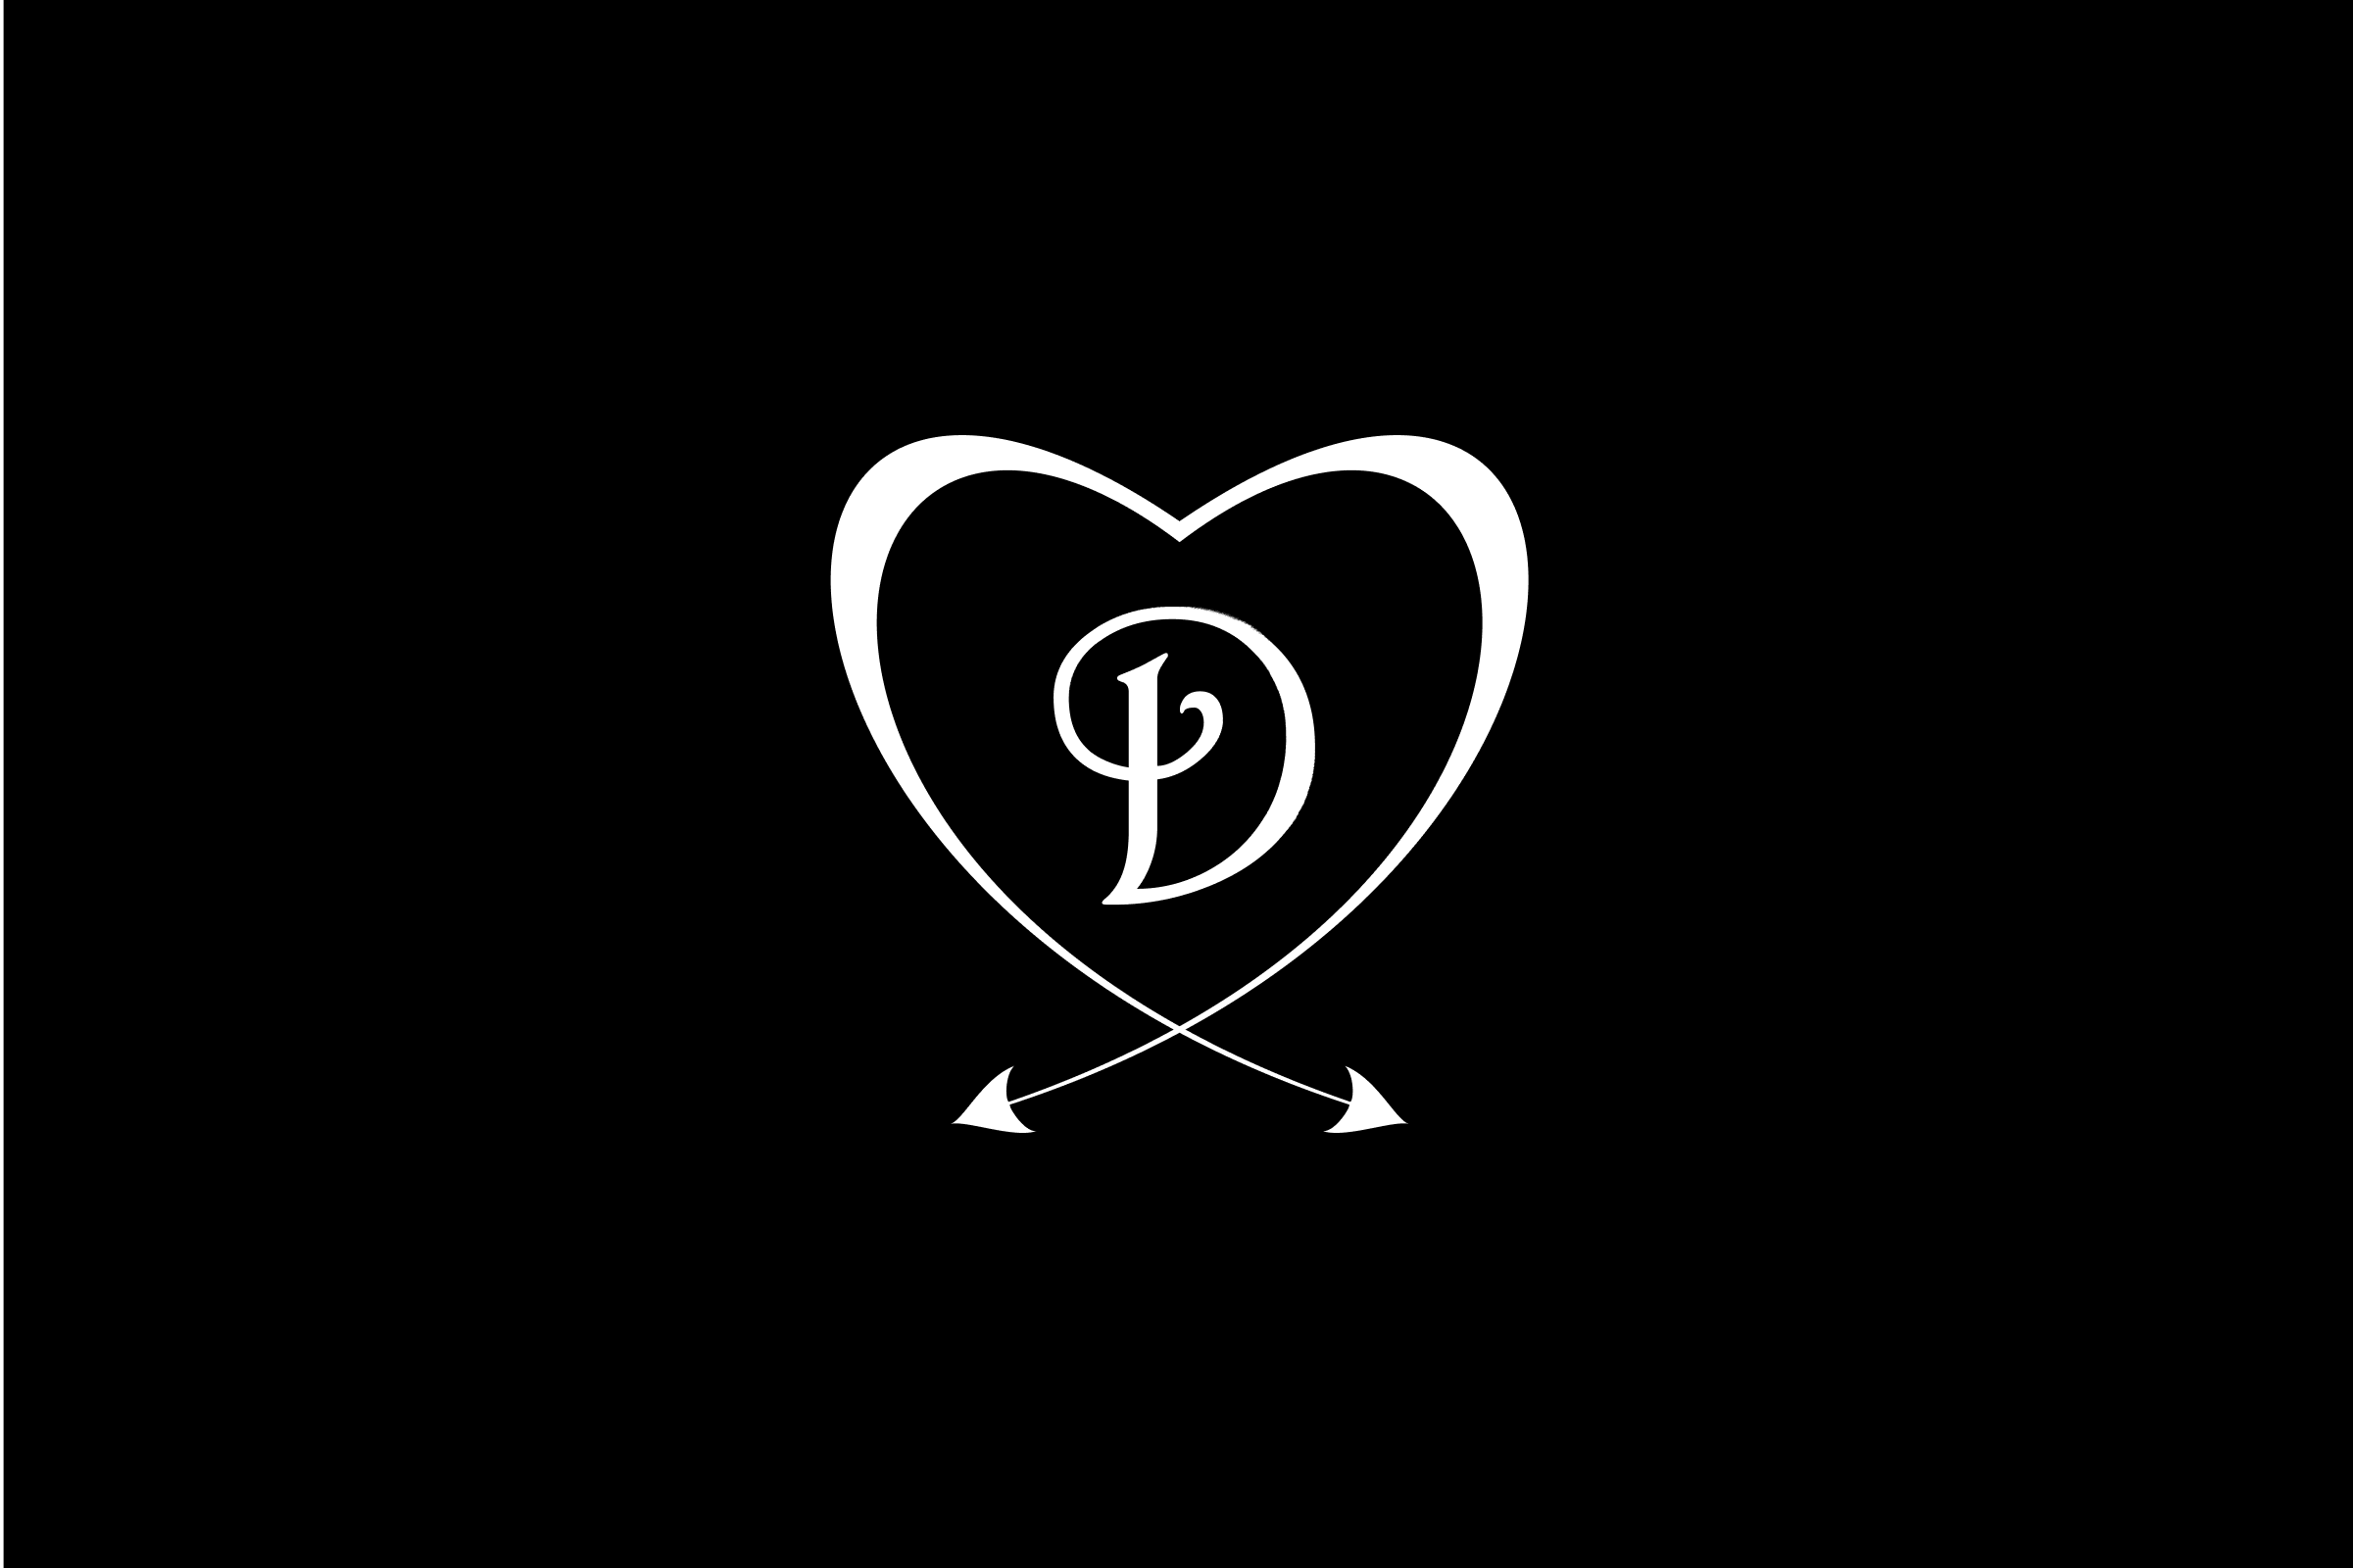 simon-p-coyle-branding-logo-design-2010-devilish